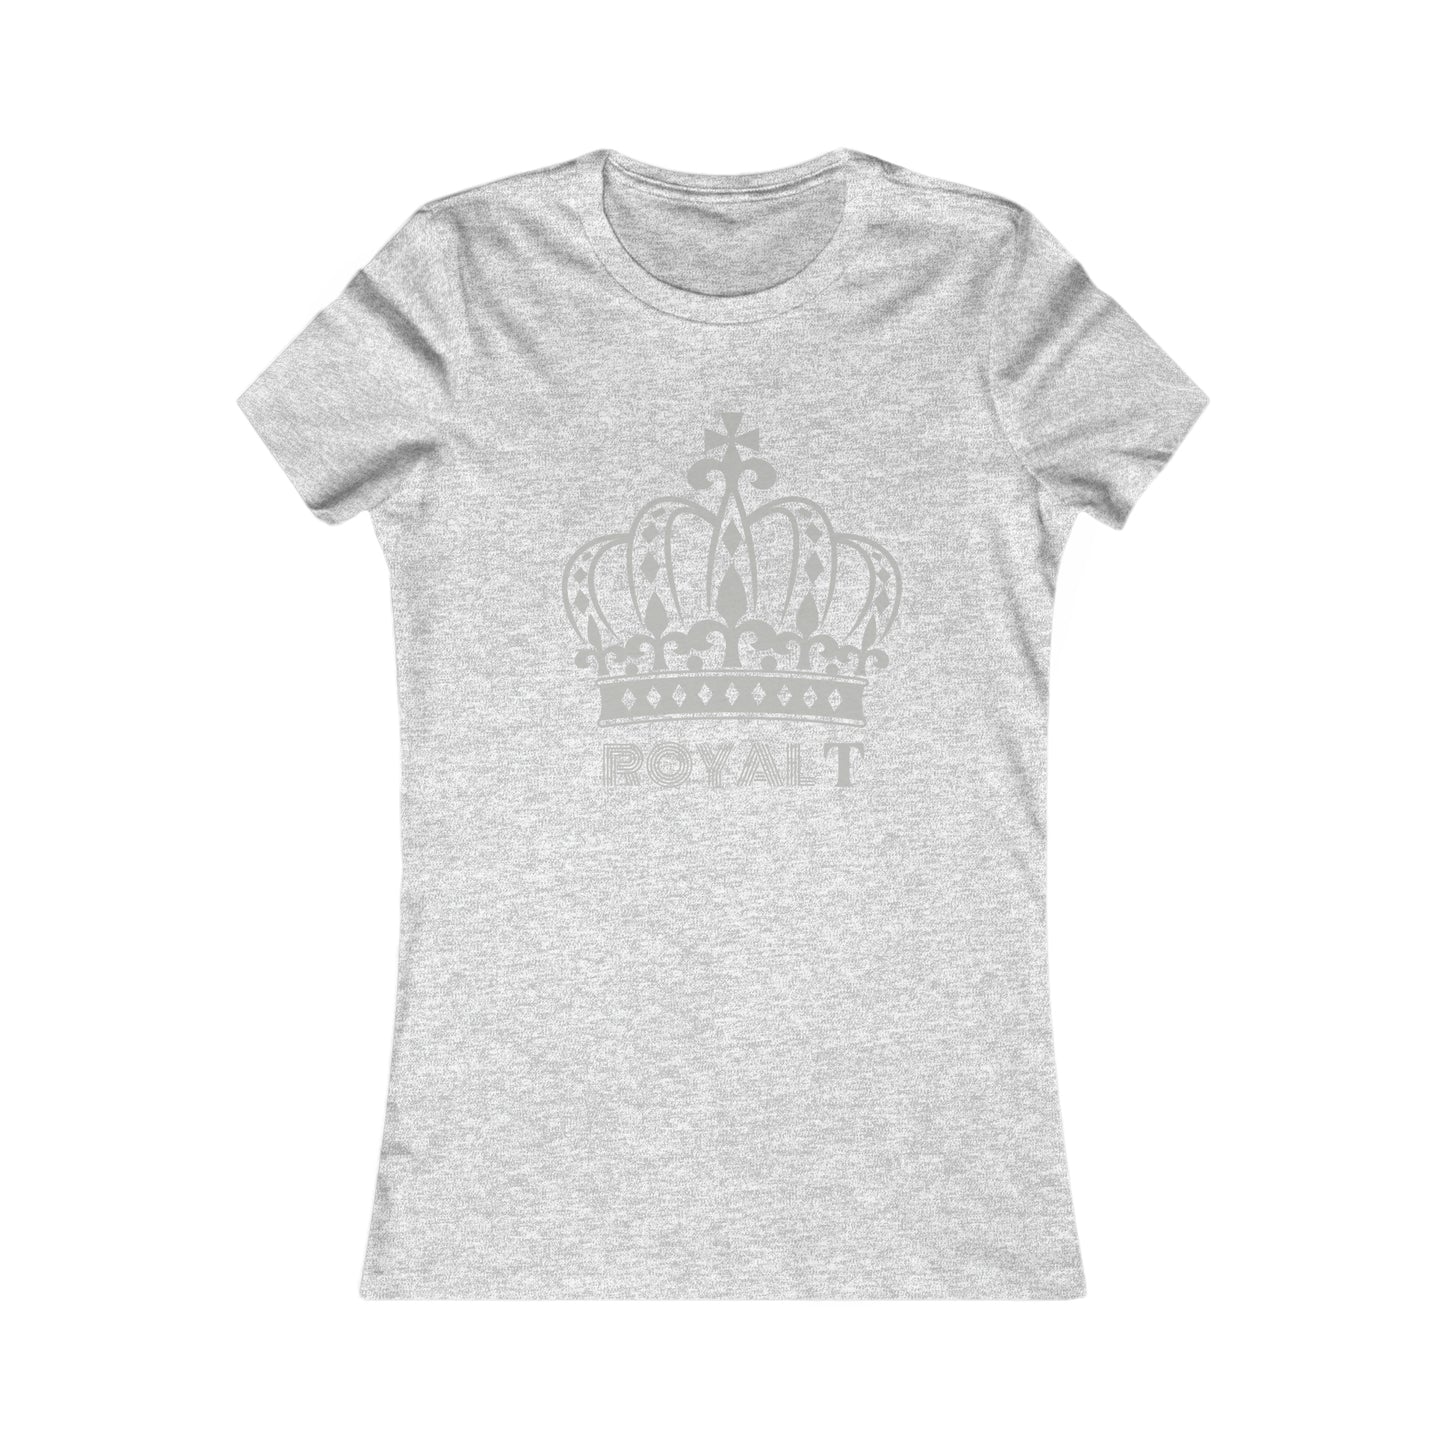 Athletic Heather Grey - Women's Favorite T Shirt - Grey Royal T